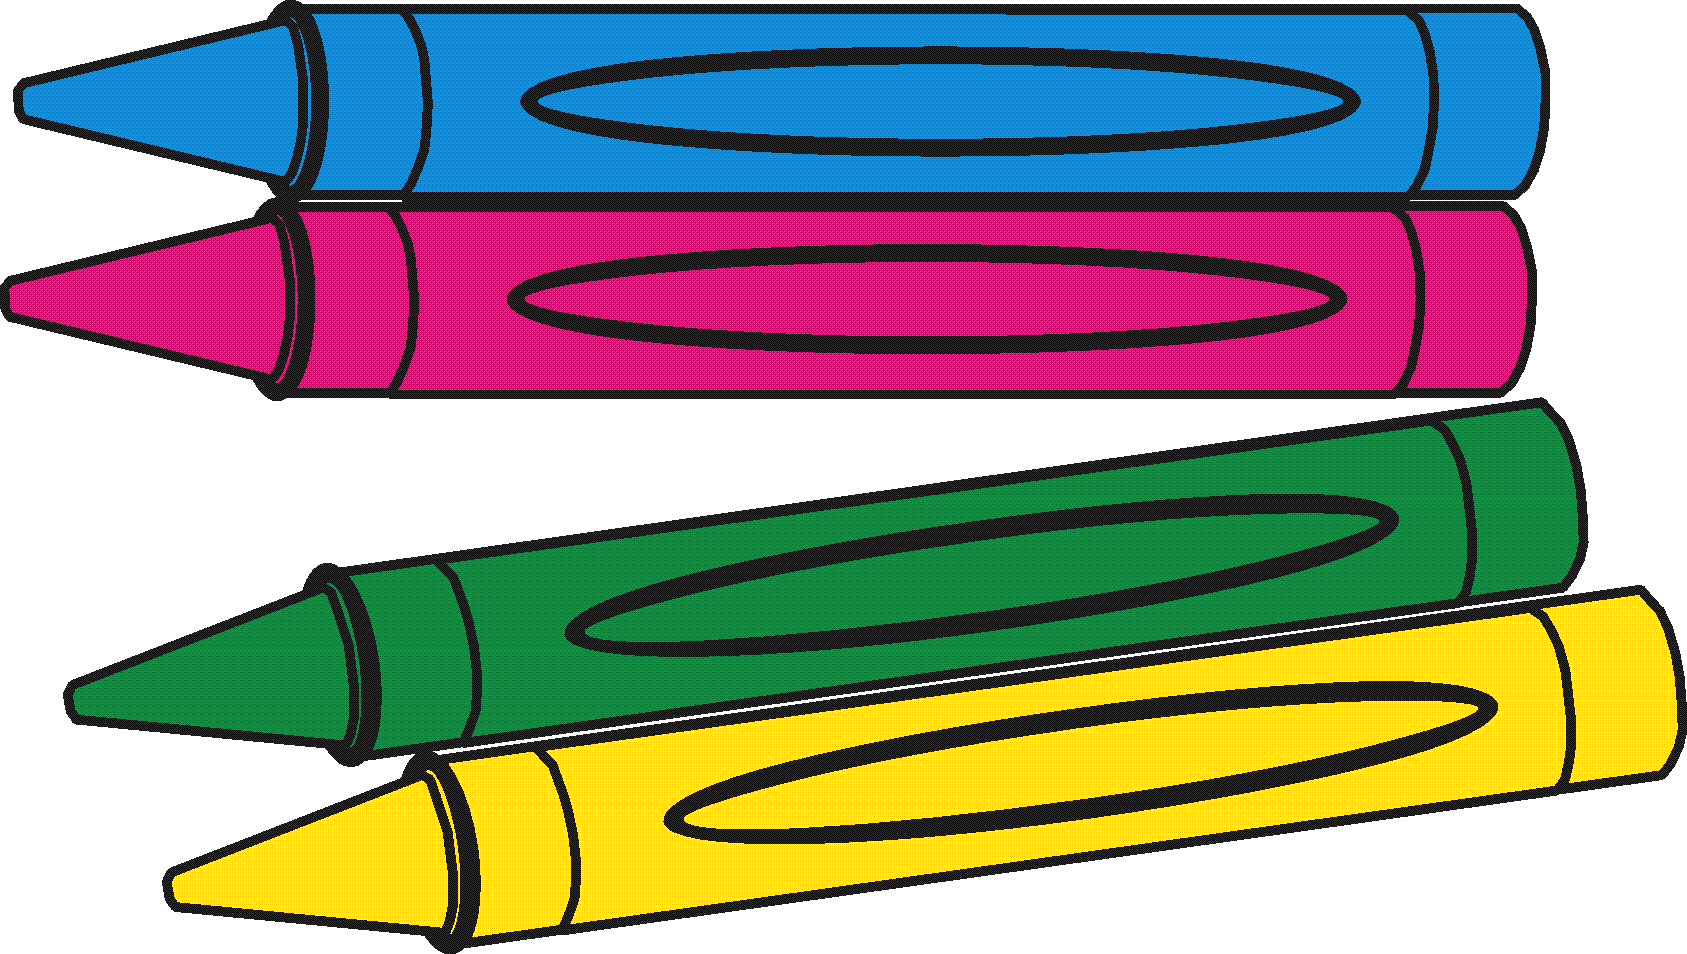 Crayola Crayon Box Clipart Crayon Clip Art With Crayons Clip Art 1 Gif